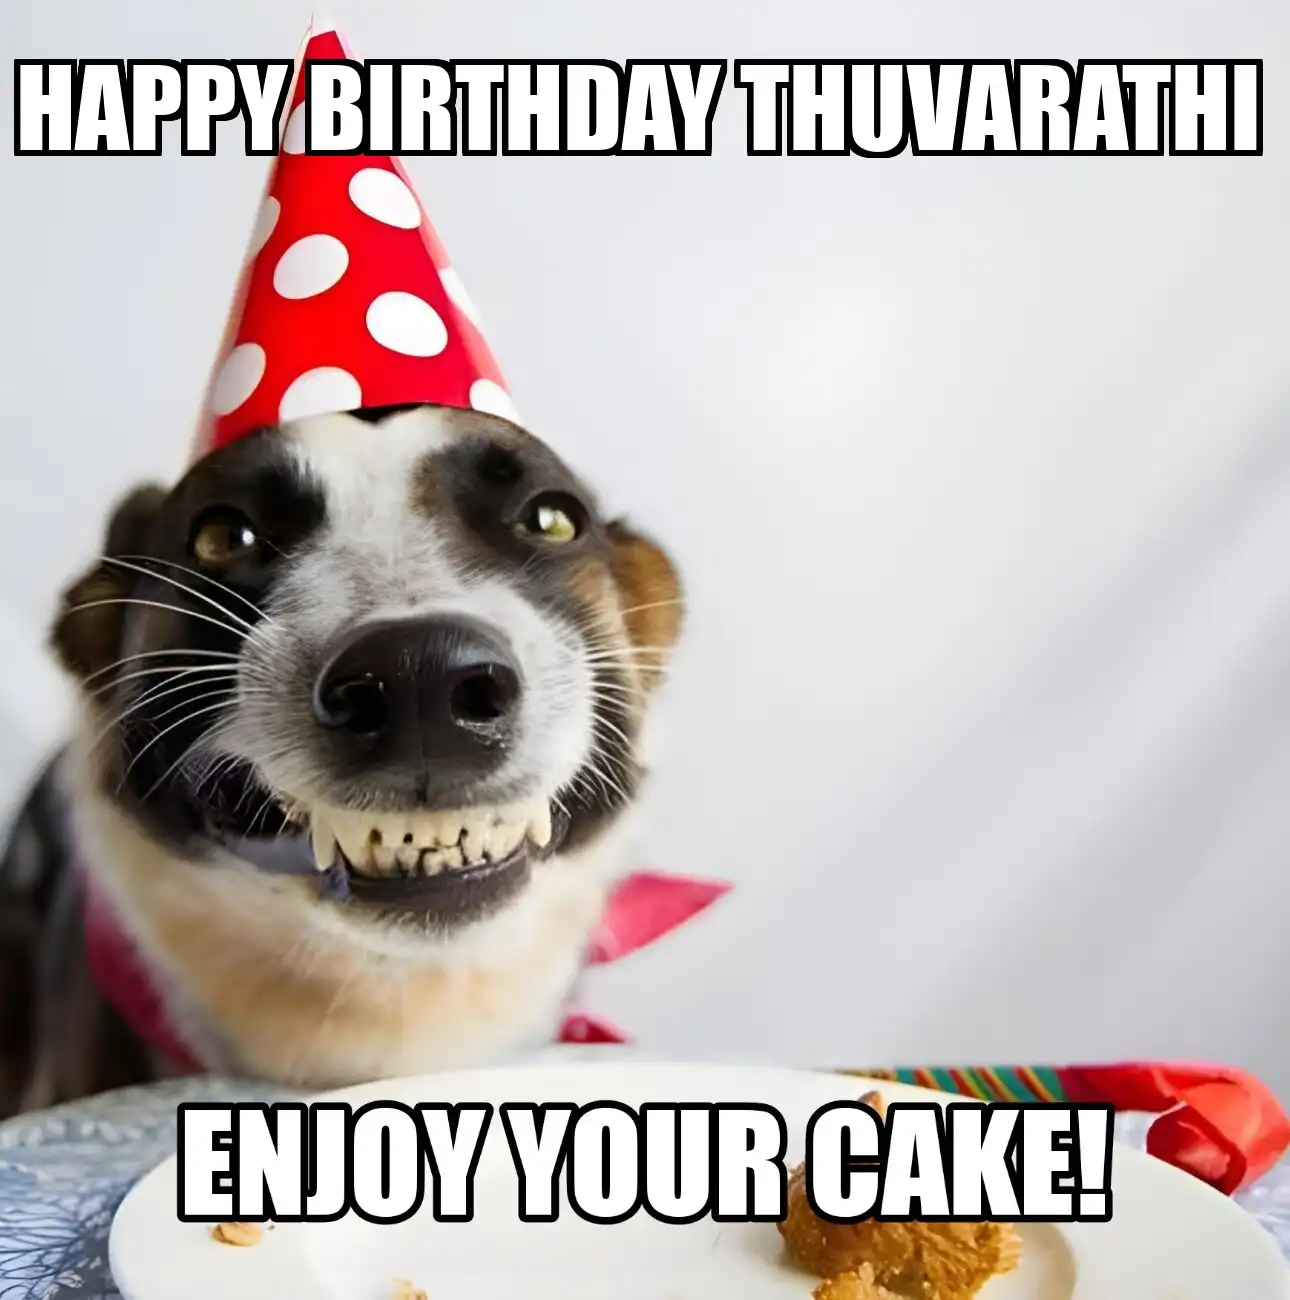 Happy Birthday Thuvarathi Enjoy Your Cake Dog Meme